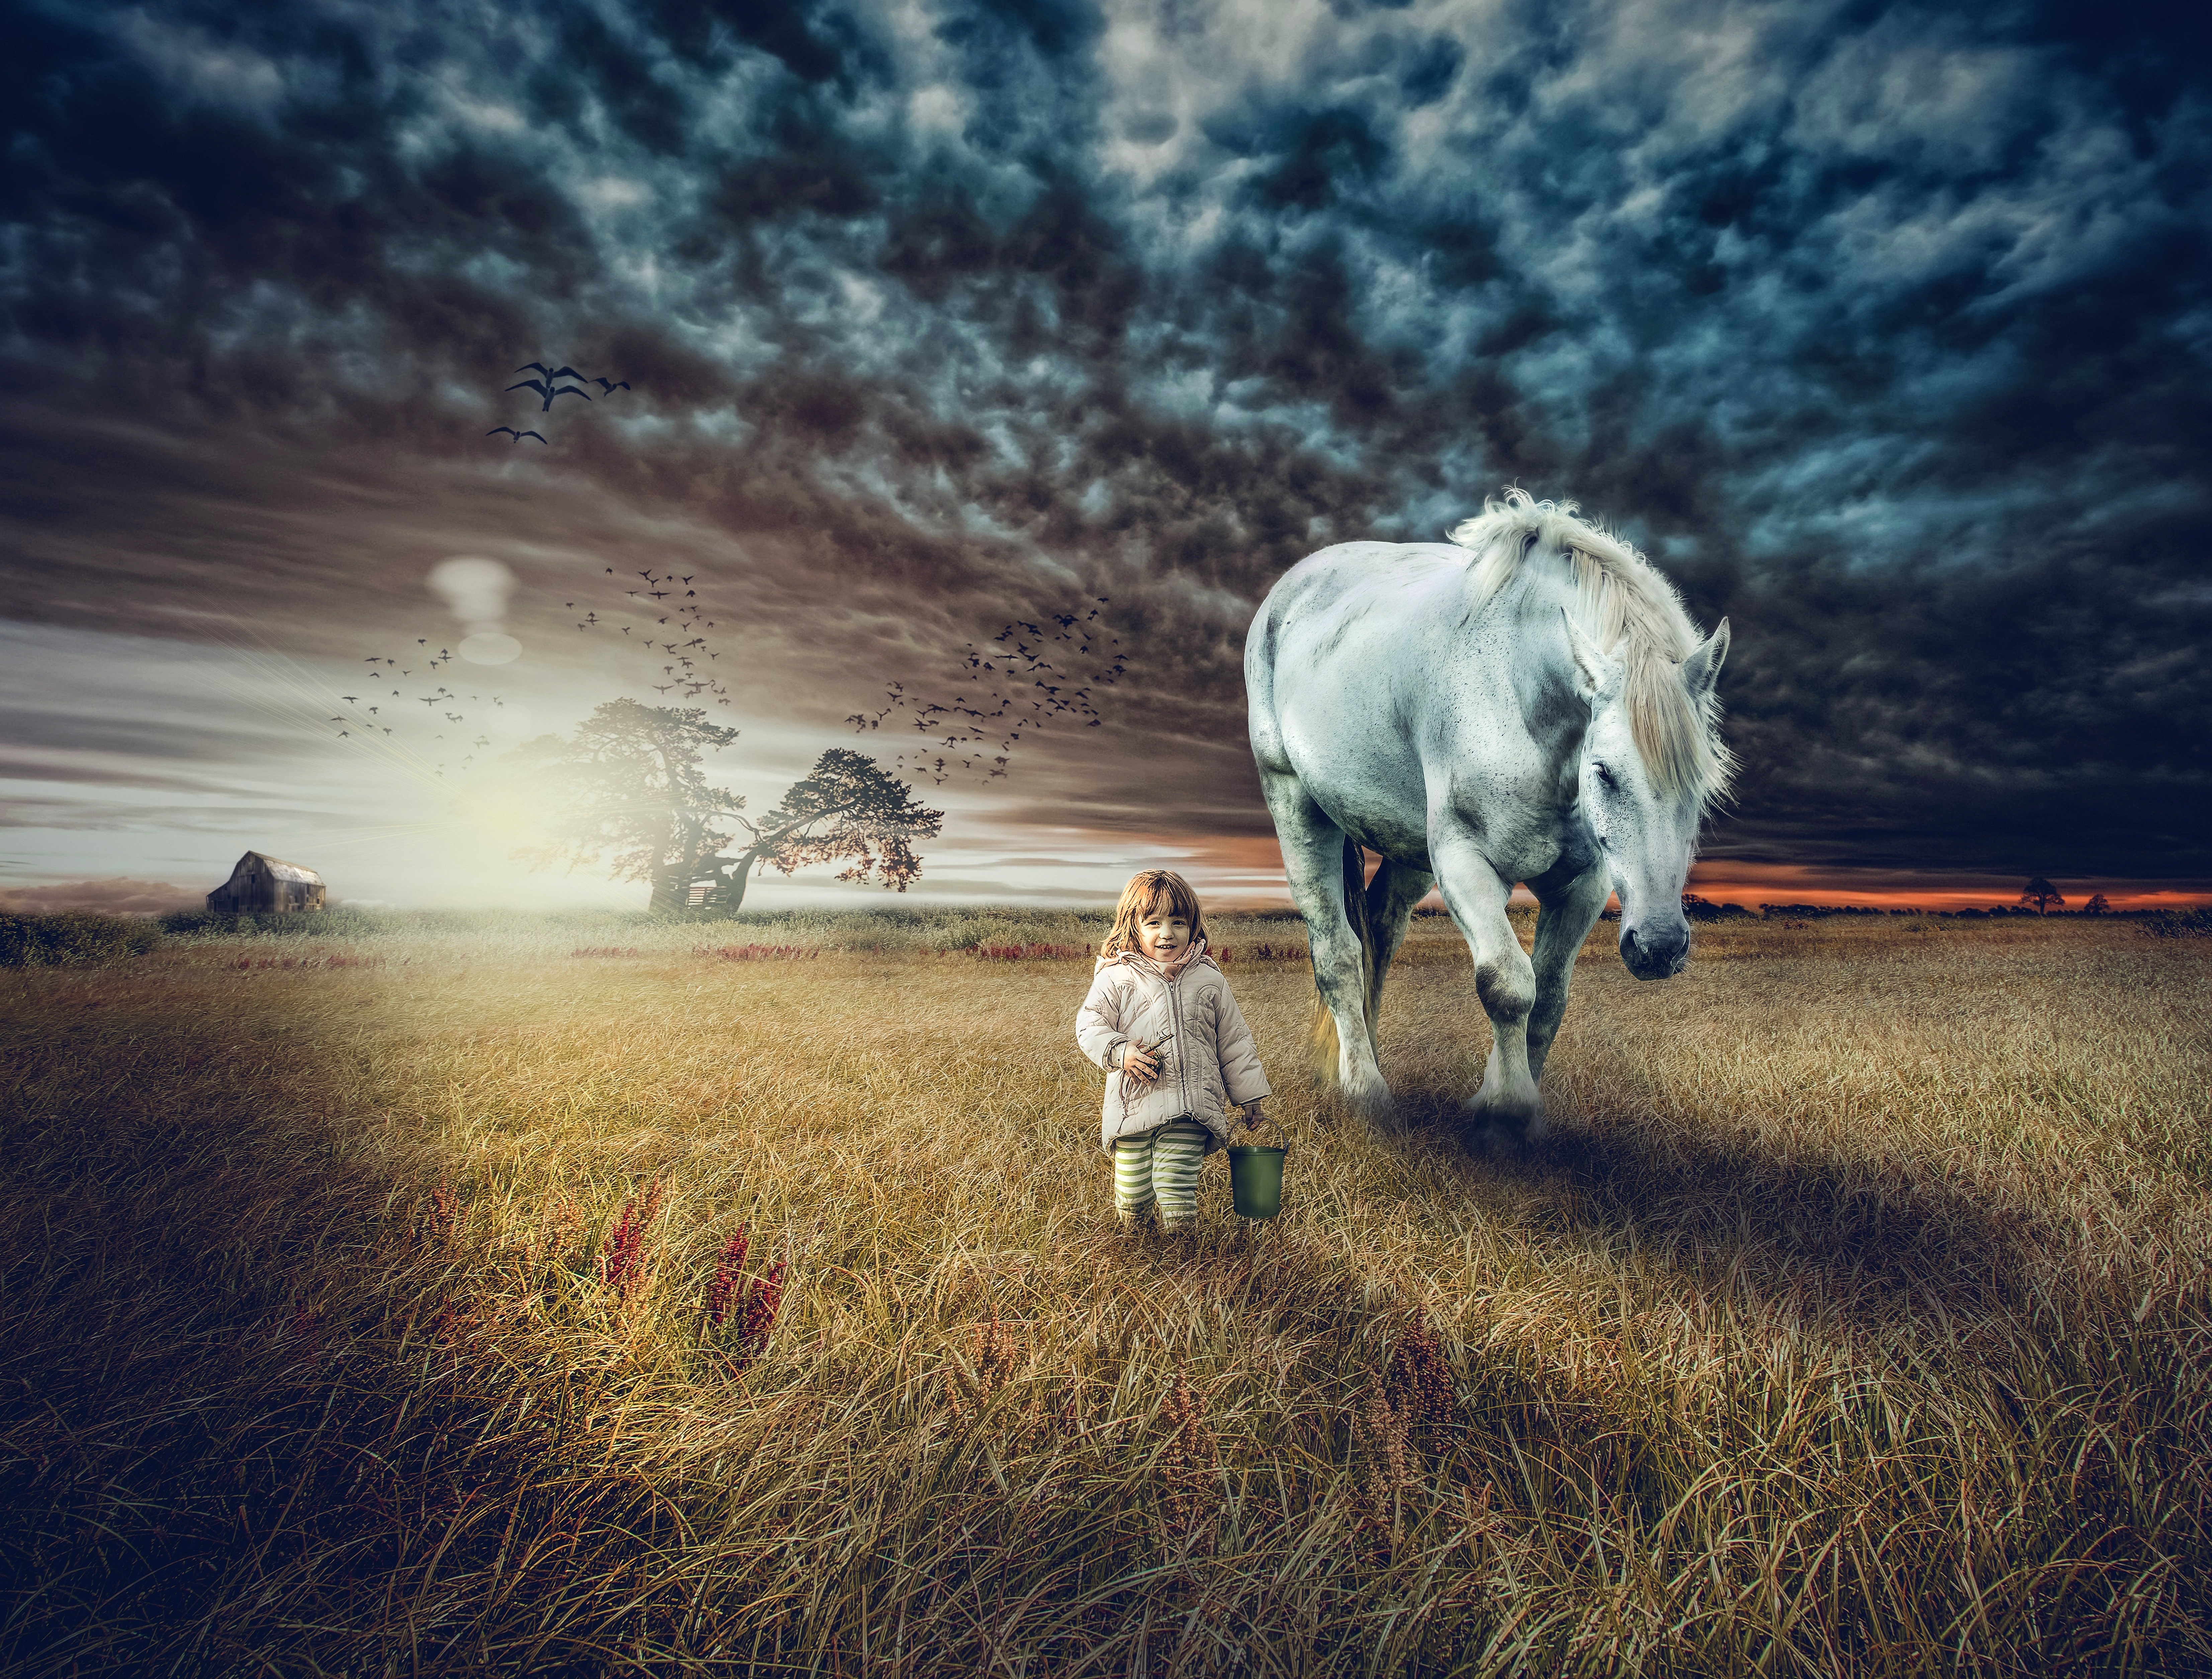 HD wallpaper, 5K, Cute Girl, White Horse, Farm Land, Countryside, Sunset